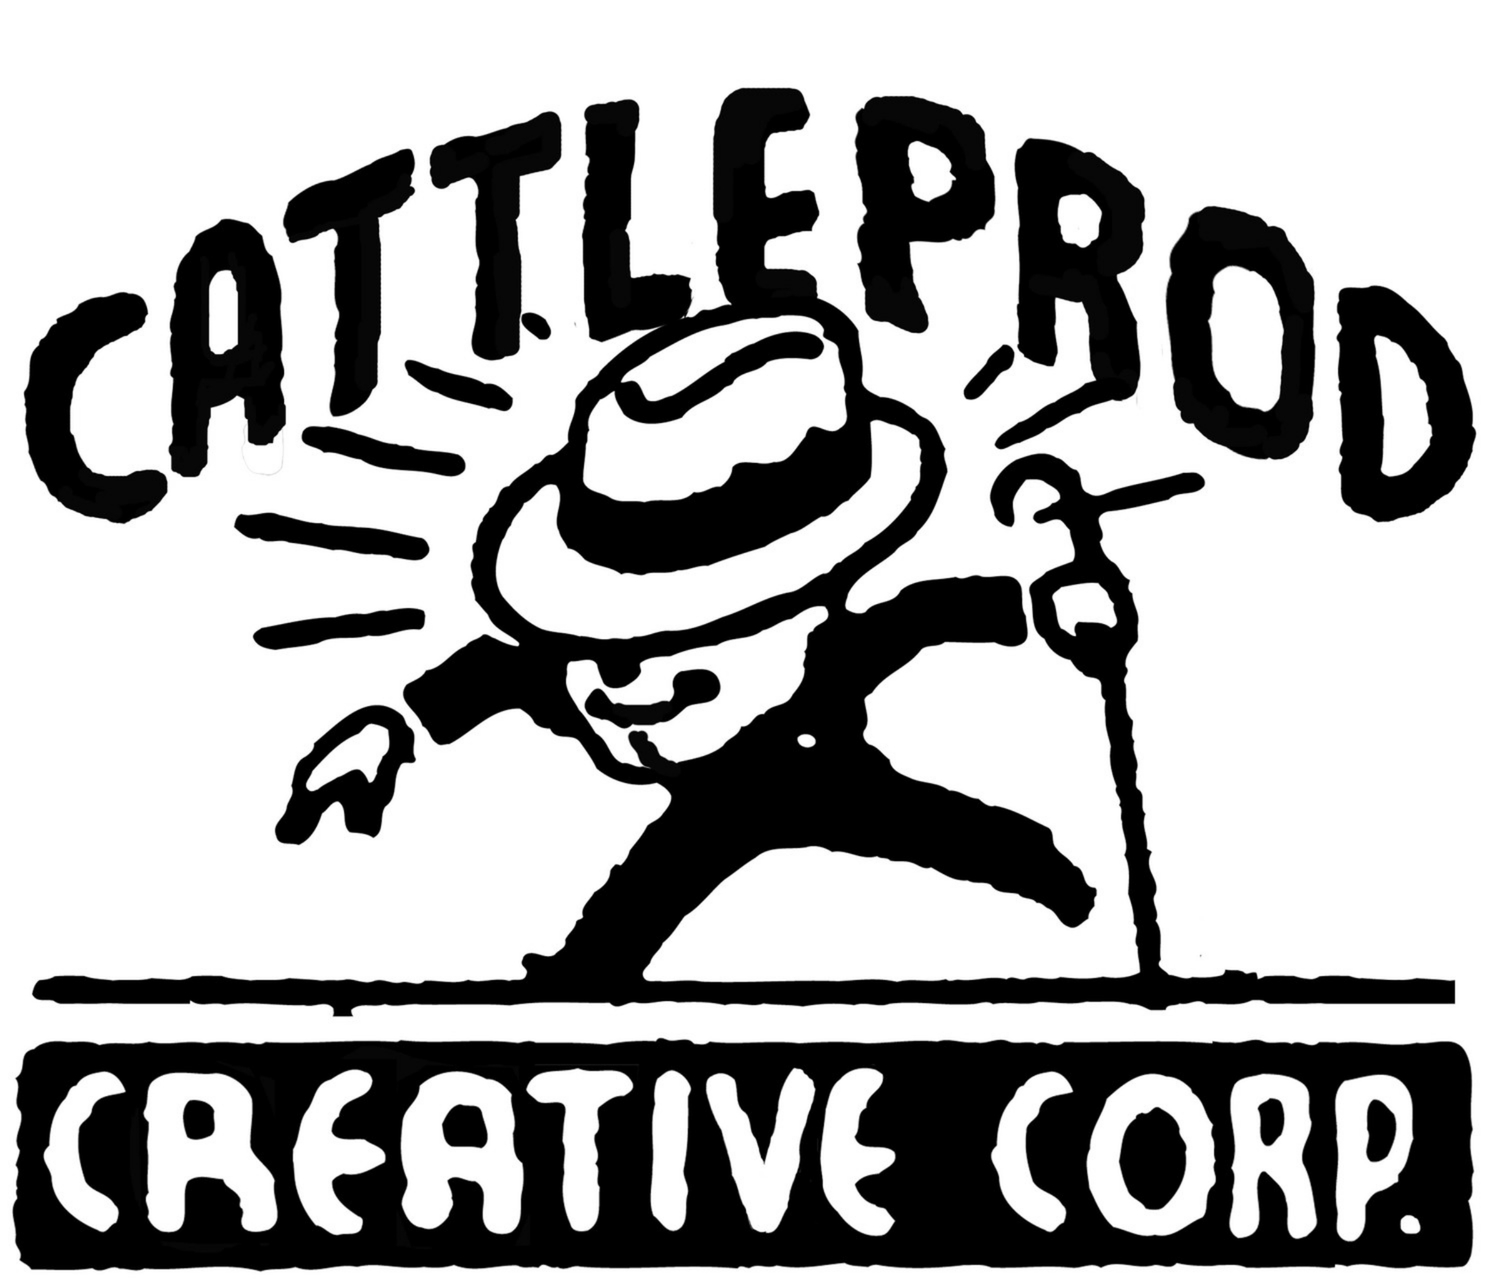 Cattleprod Creative